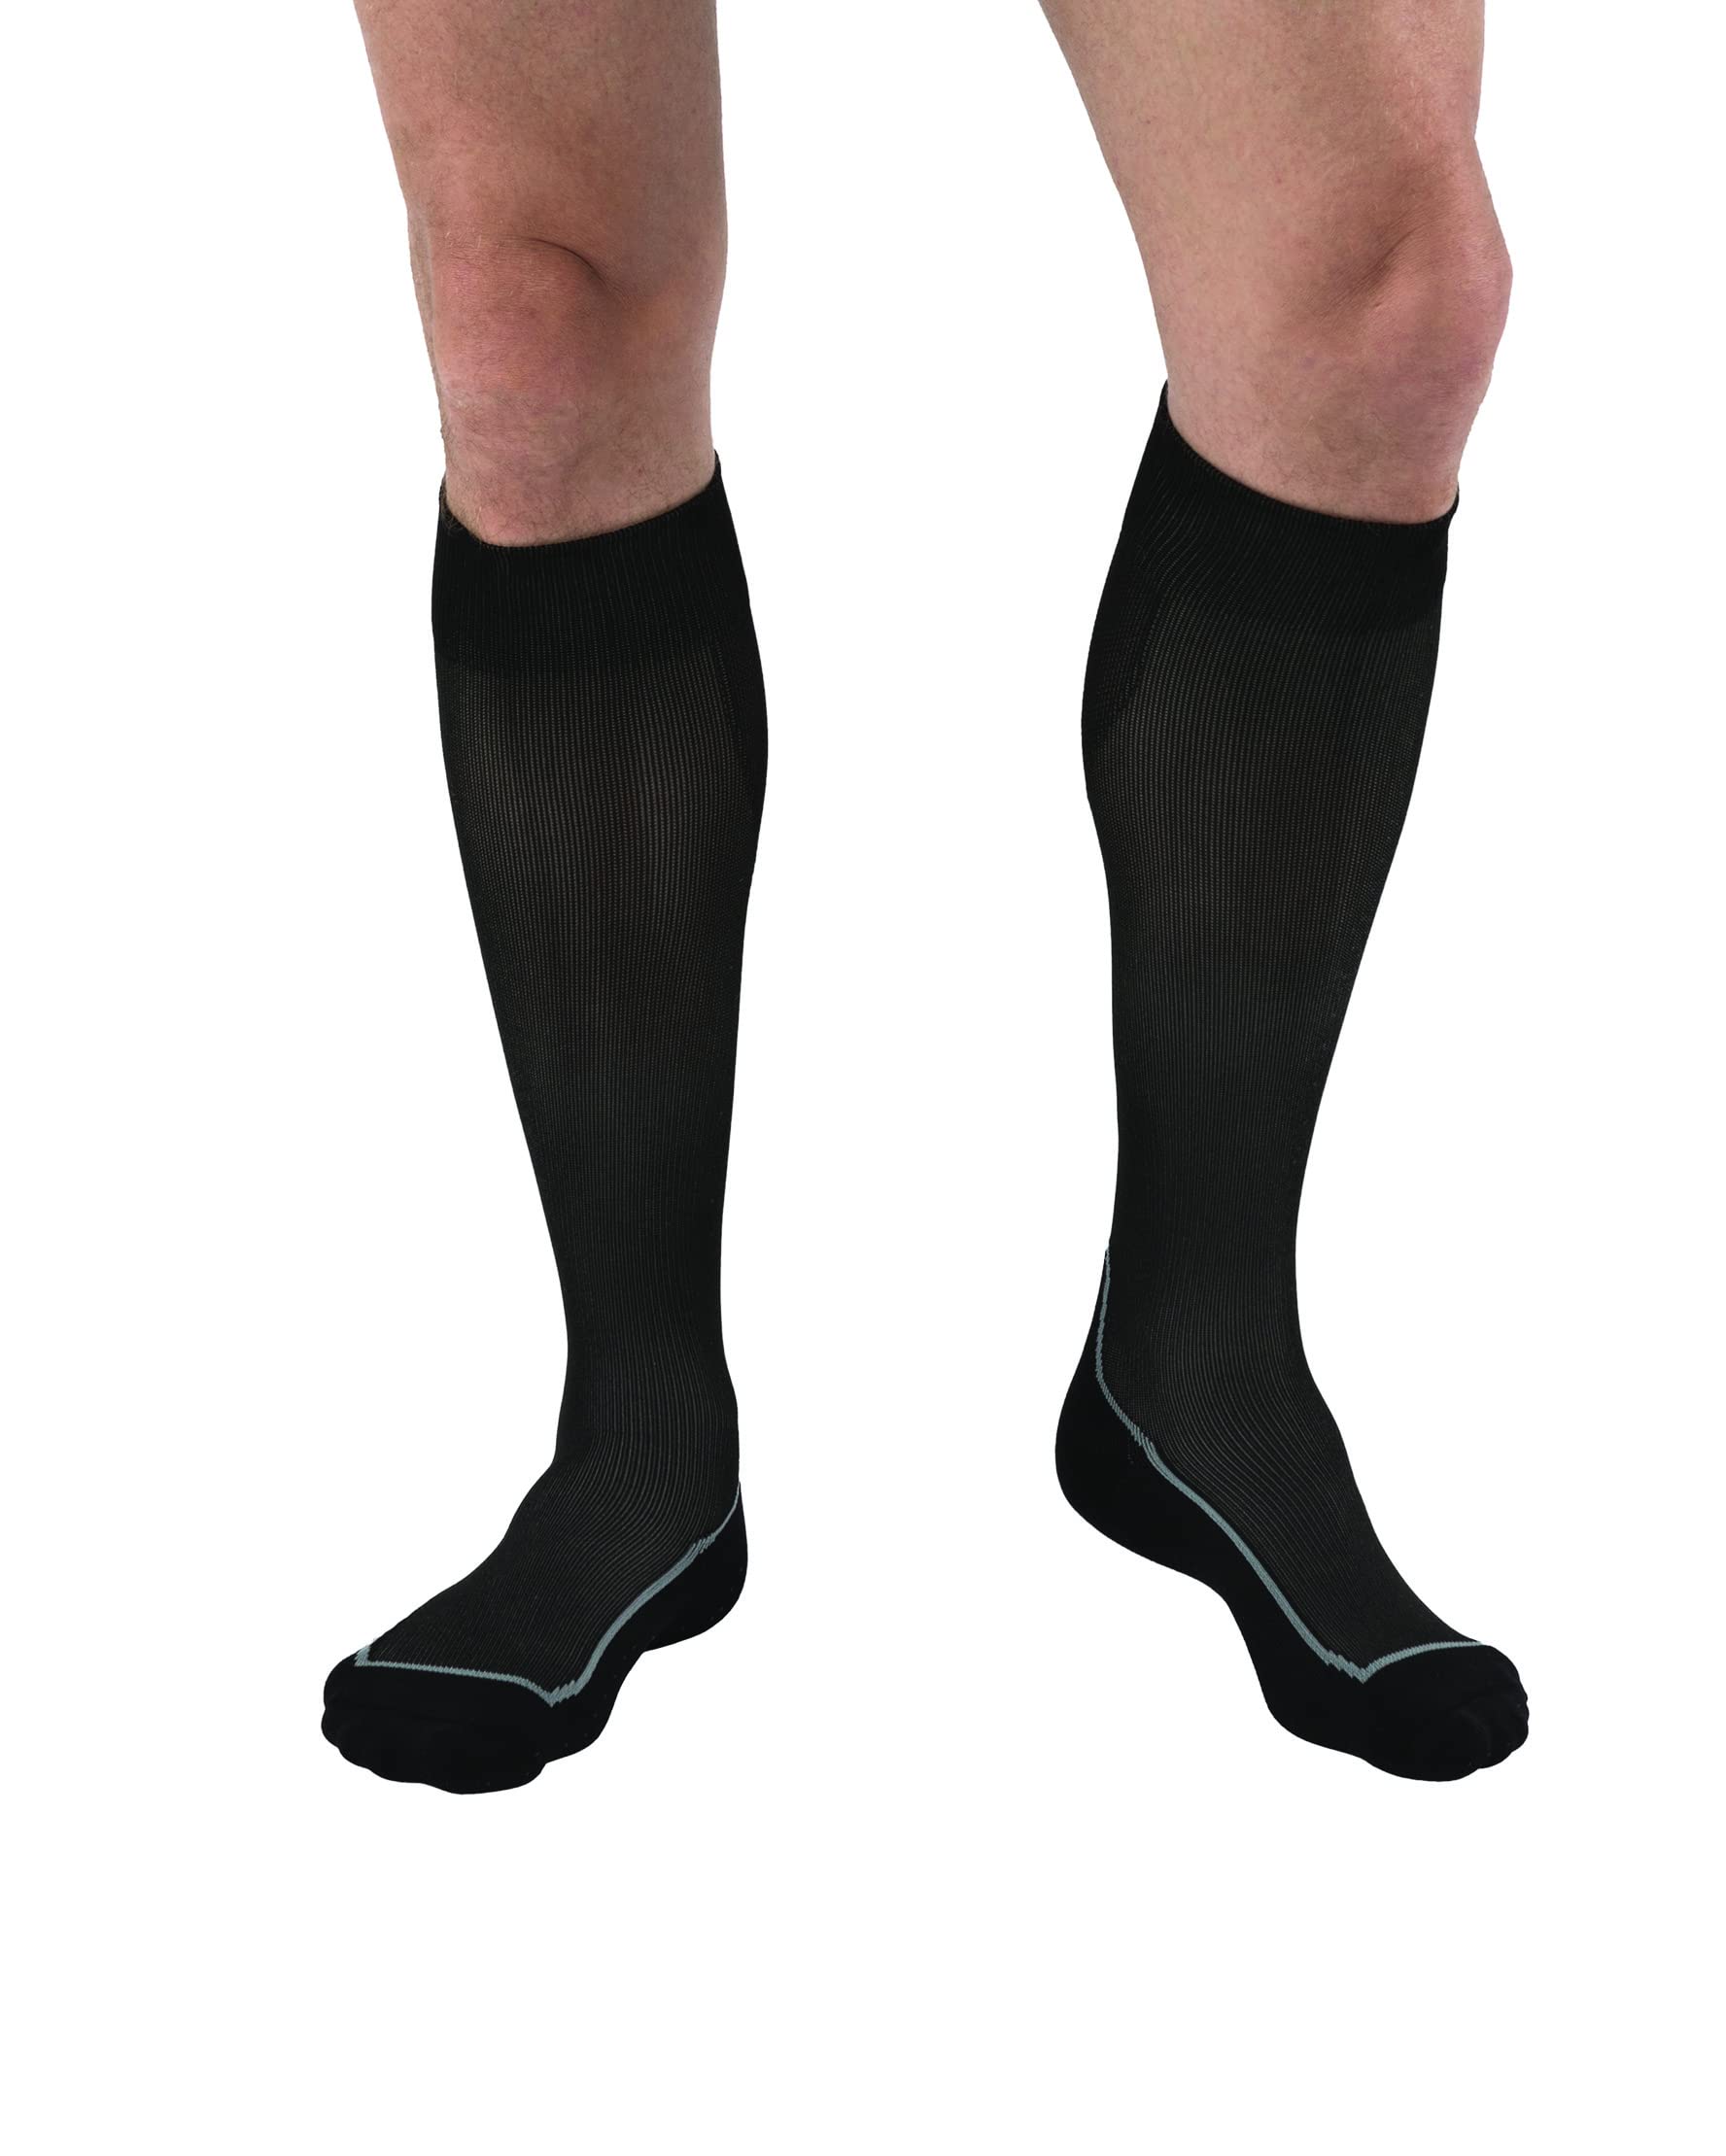 JOBST Sport Knee High 15-20 mmHg Compression Socks, Black/Cool Black,  X-Large Black X-Large